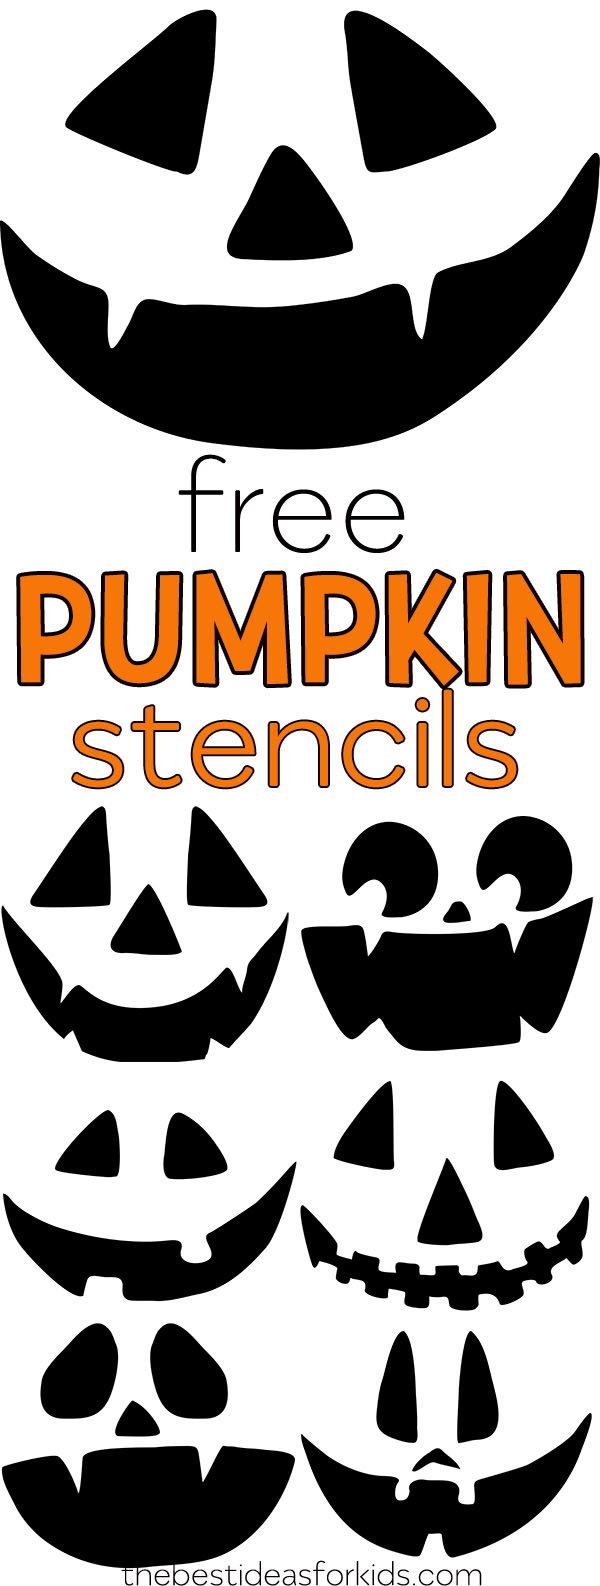 free-pumpkin-carving-stencils-the-best-ideas-for-kids